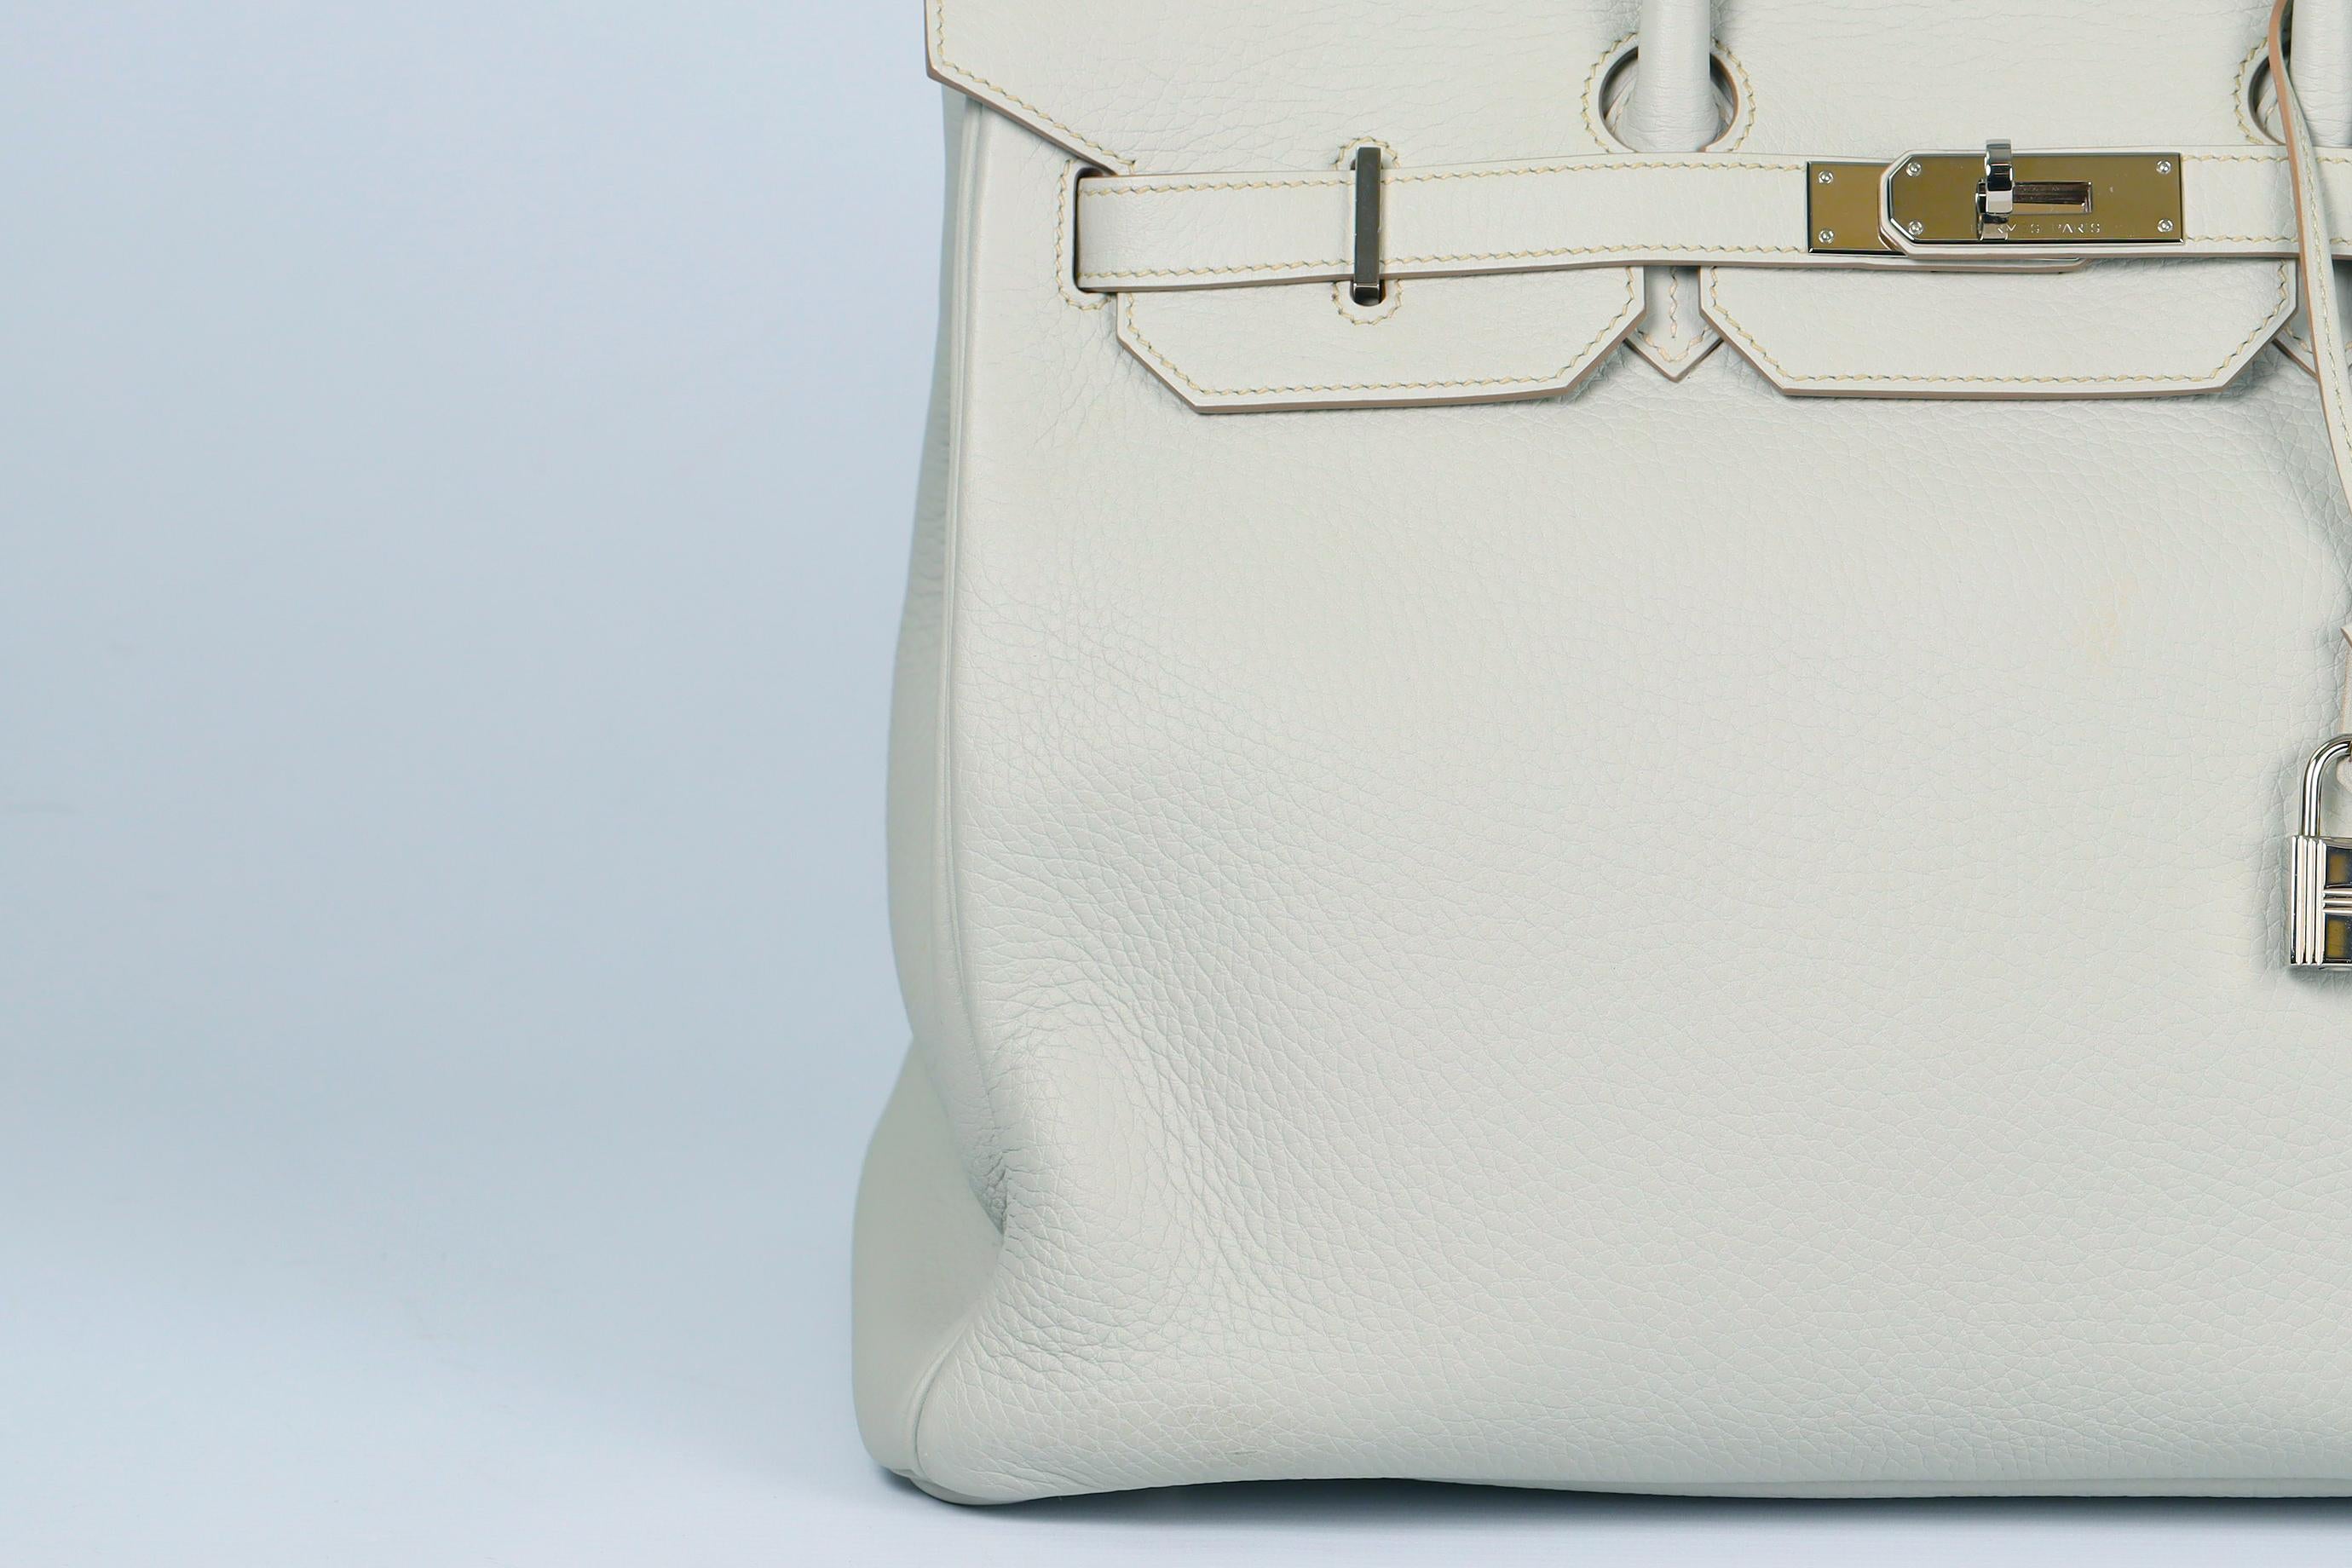 Hermès 2013 Birkin 35cm Togo Leather Bag For Sale 8